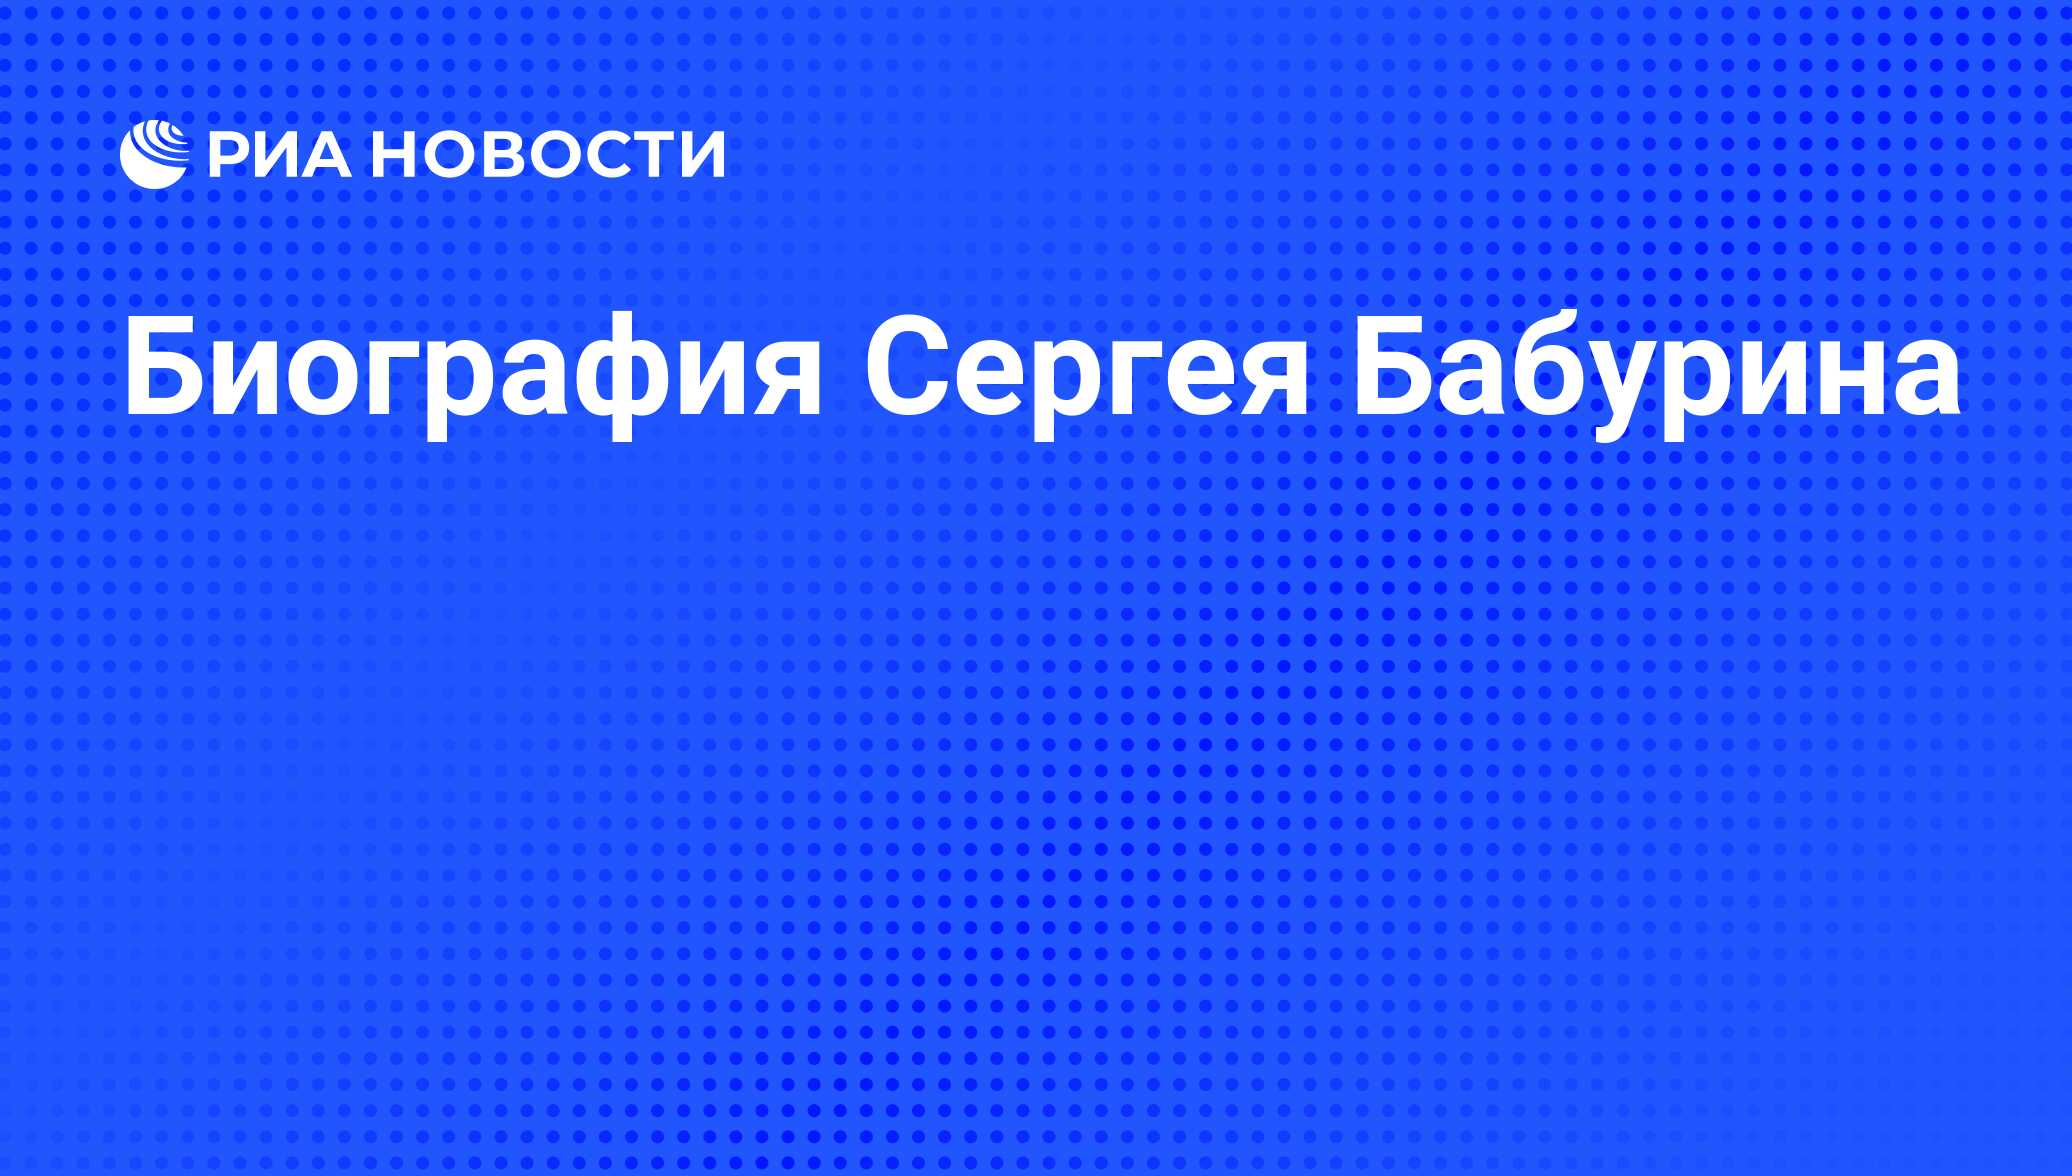 Доклад: Бабурин Сергей Николаевич